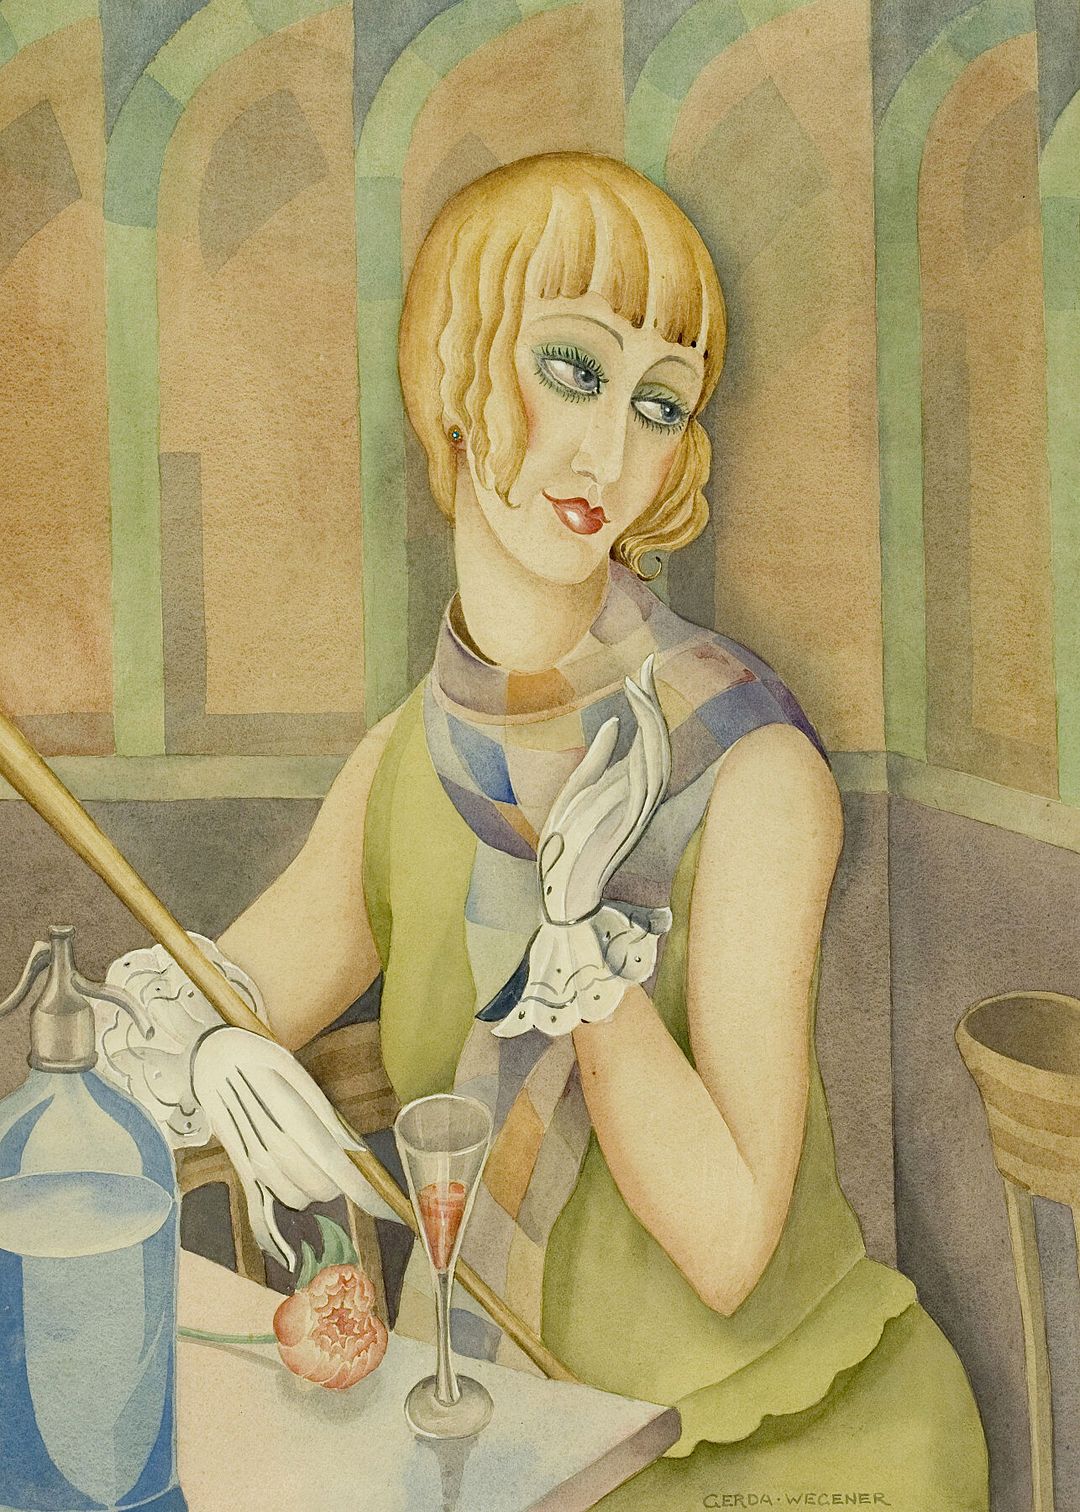 Lili Elbe by Gerda Wegener - c. 1928